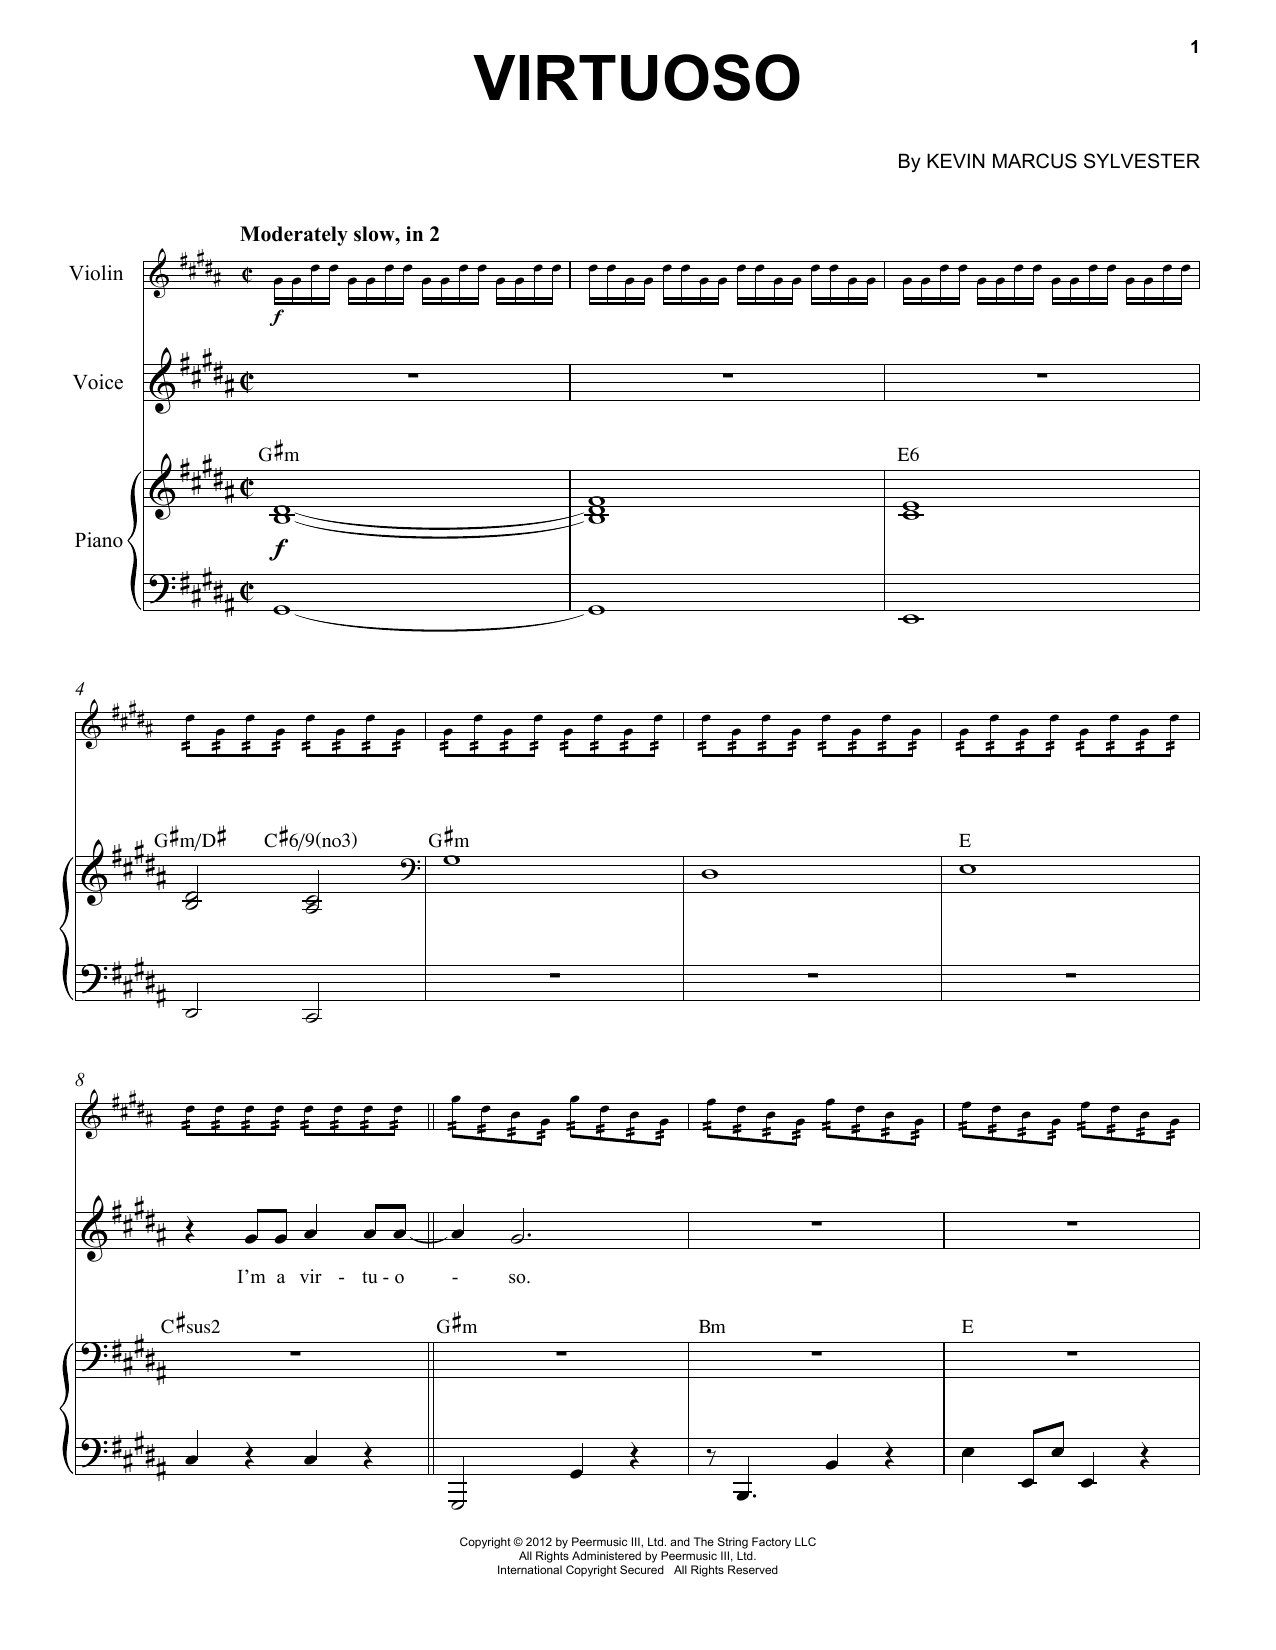 Black Violin Virtuoso Sheet Music Notes & Chords for Violin and Piano - Download or Print PDF